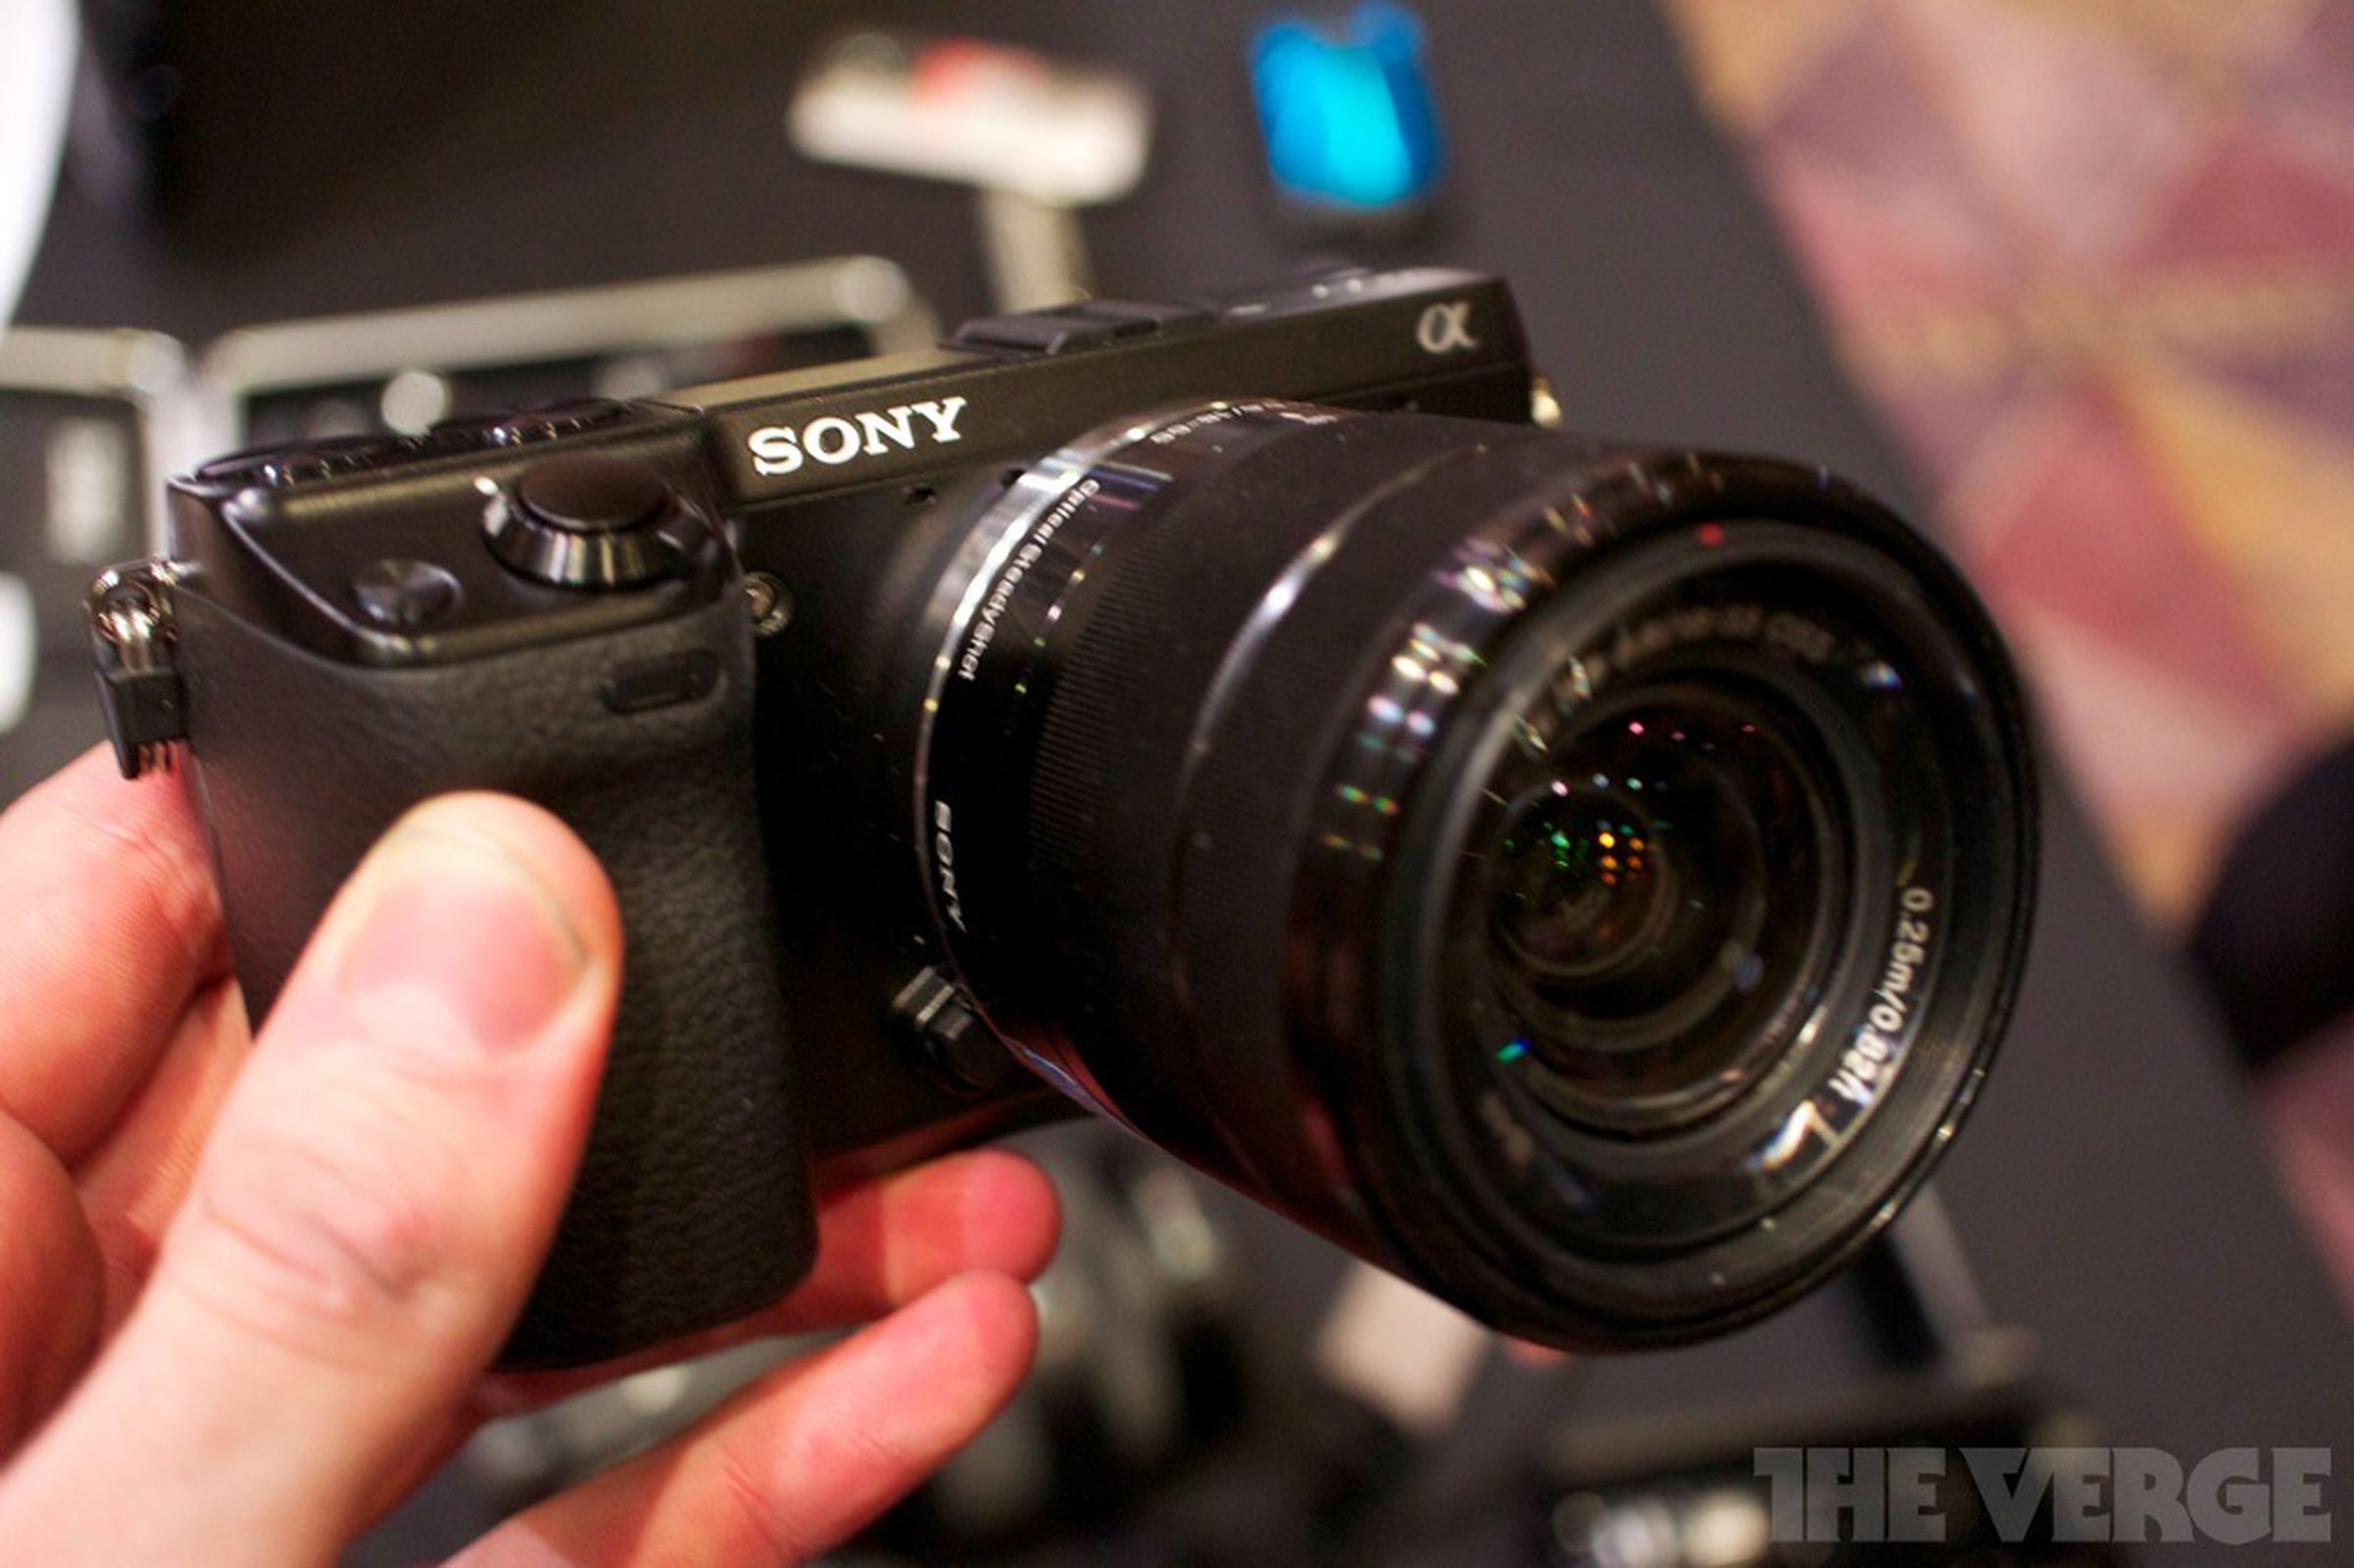 Sony A77 and NEX-7 hands-on (photos)